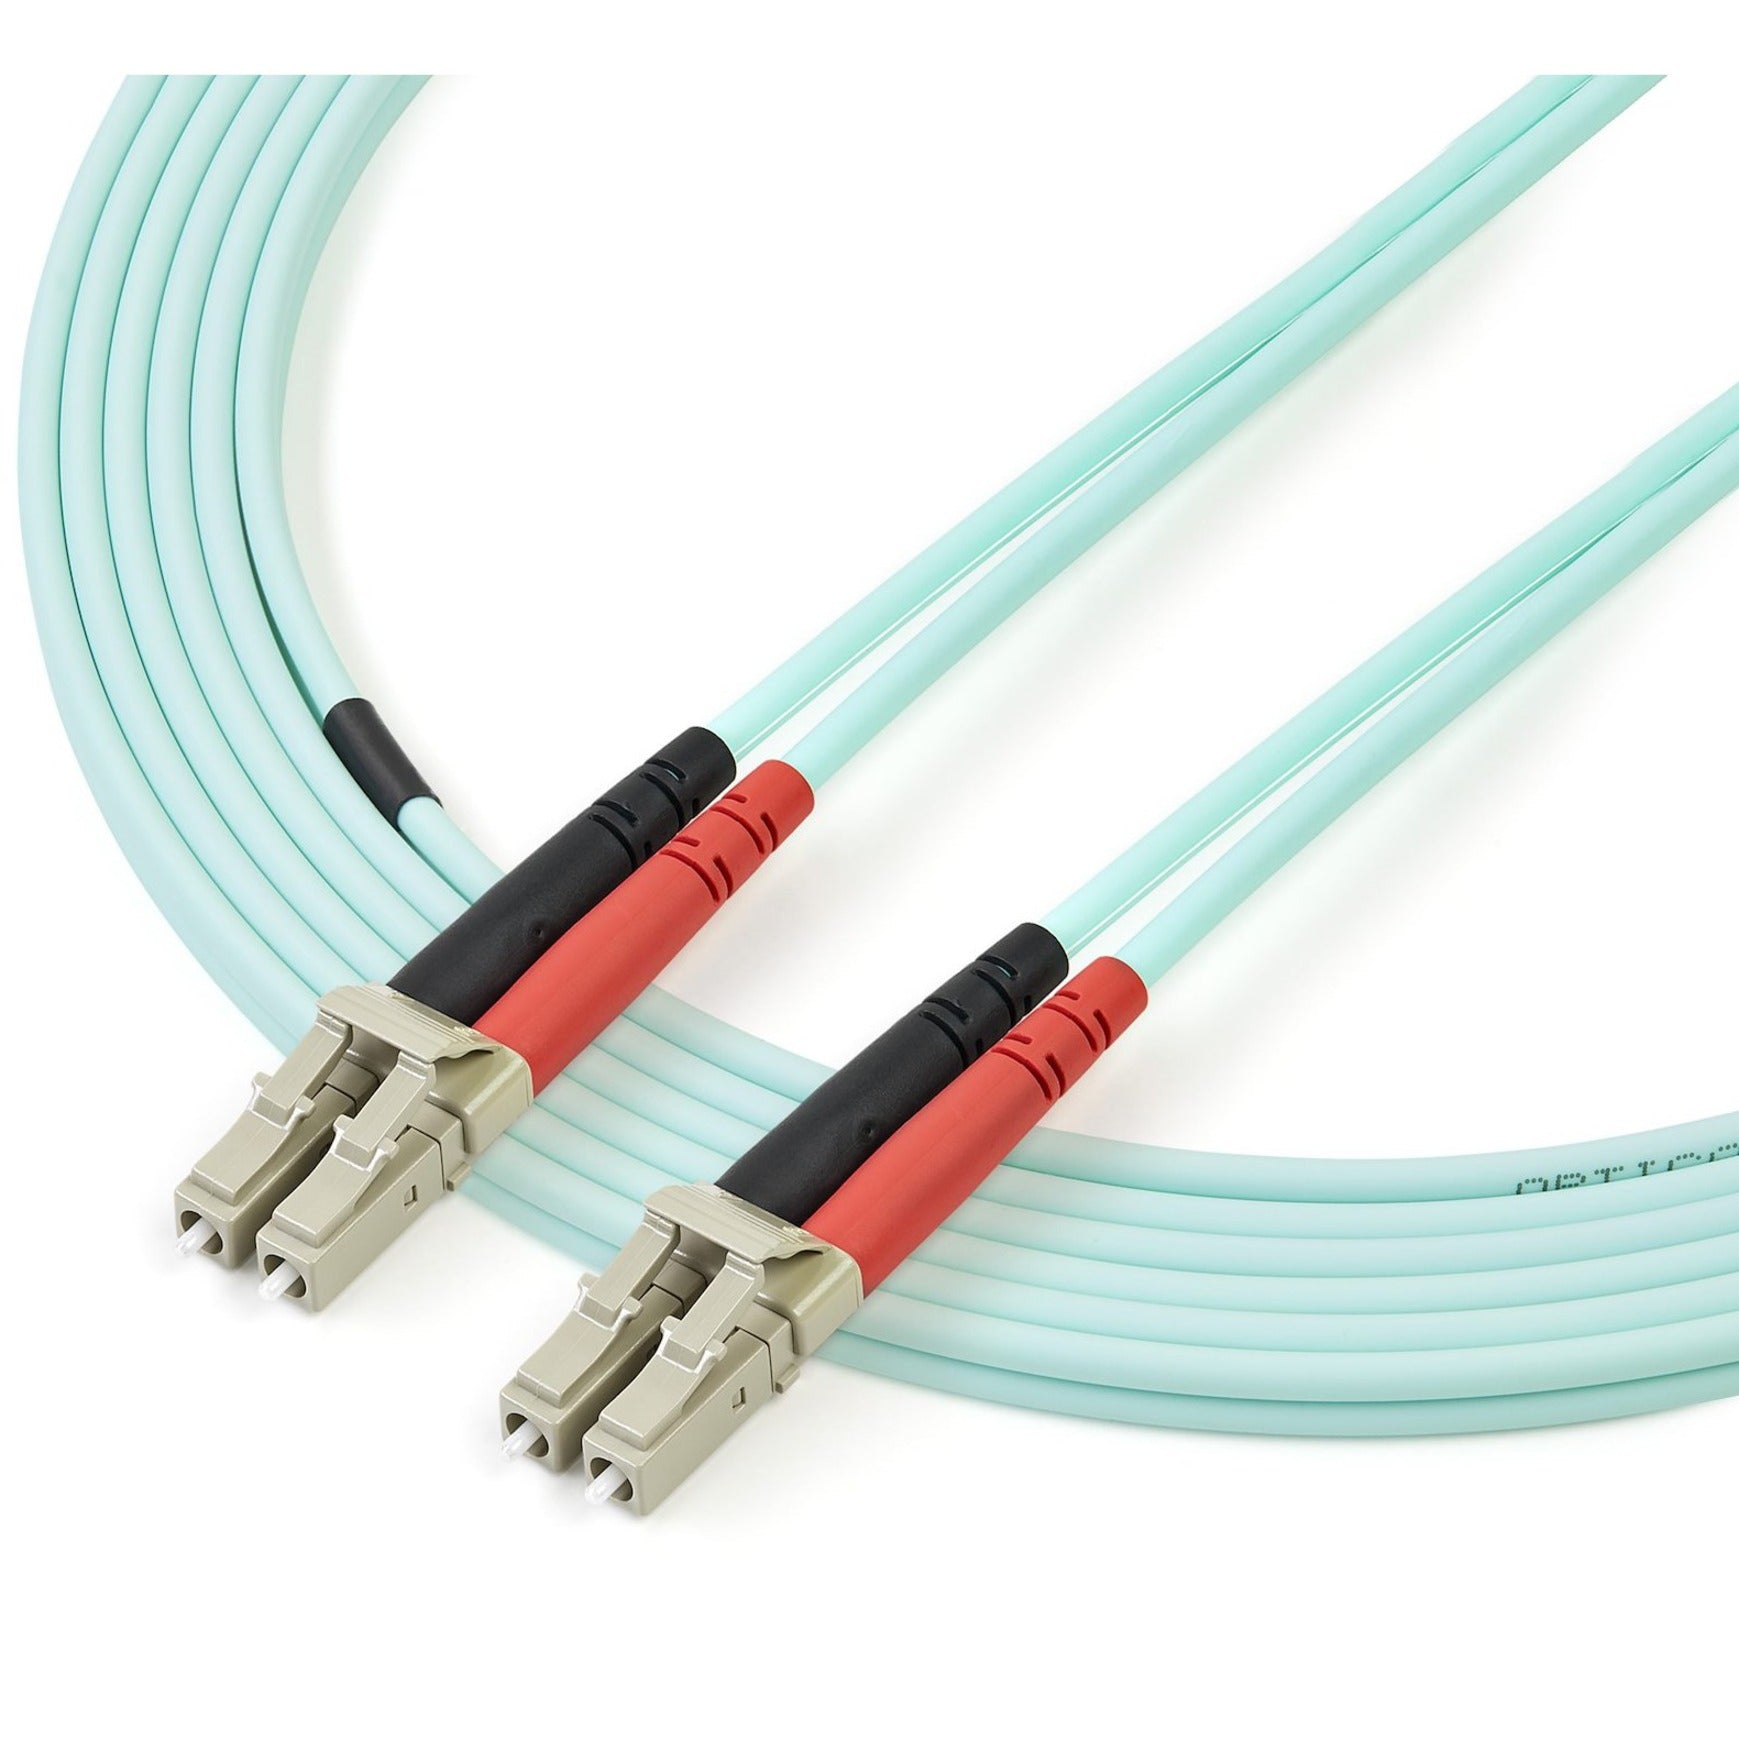 StarTech.com 450FBLCLC3 Fiber Optic Duplex Patch Network Cable, 9 ft, 100 Gb, 50/125, OM4 Fiber, LC to LC Fiber Patch Cable